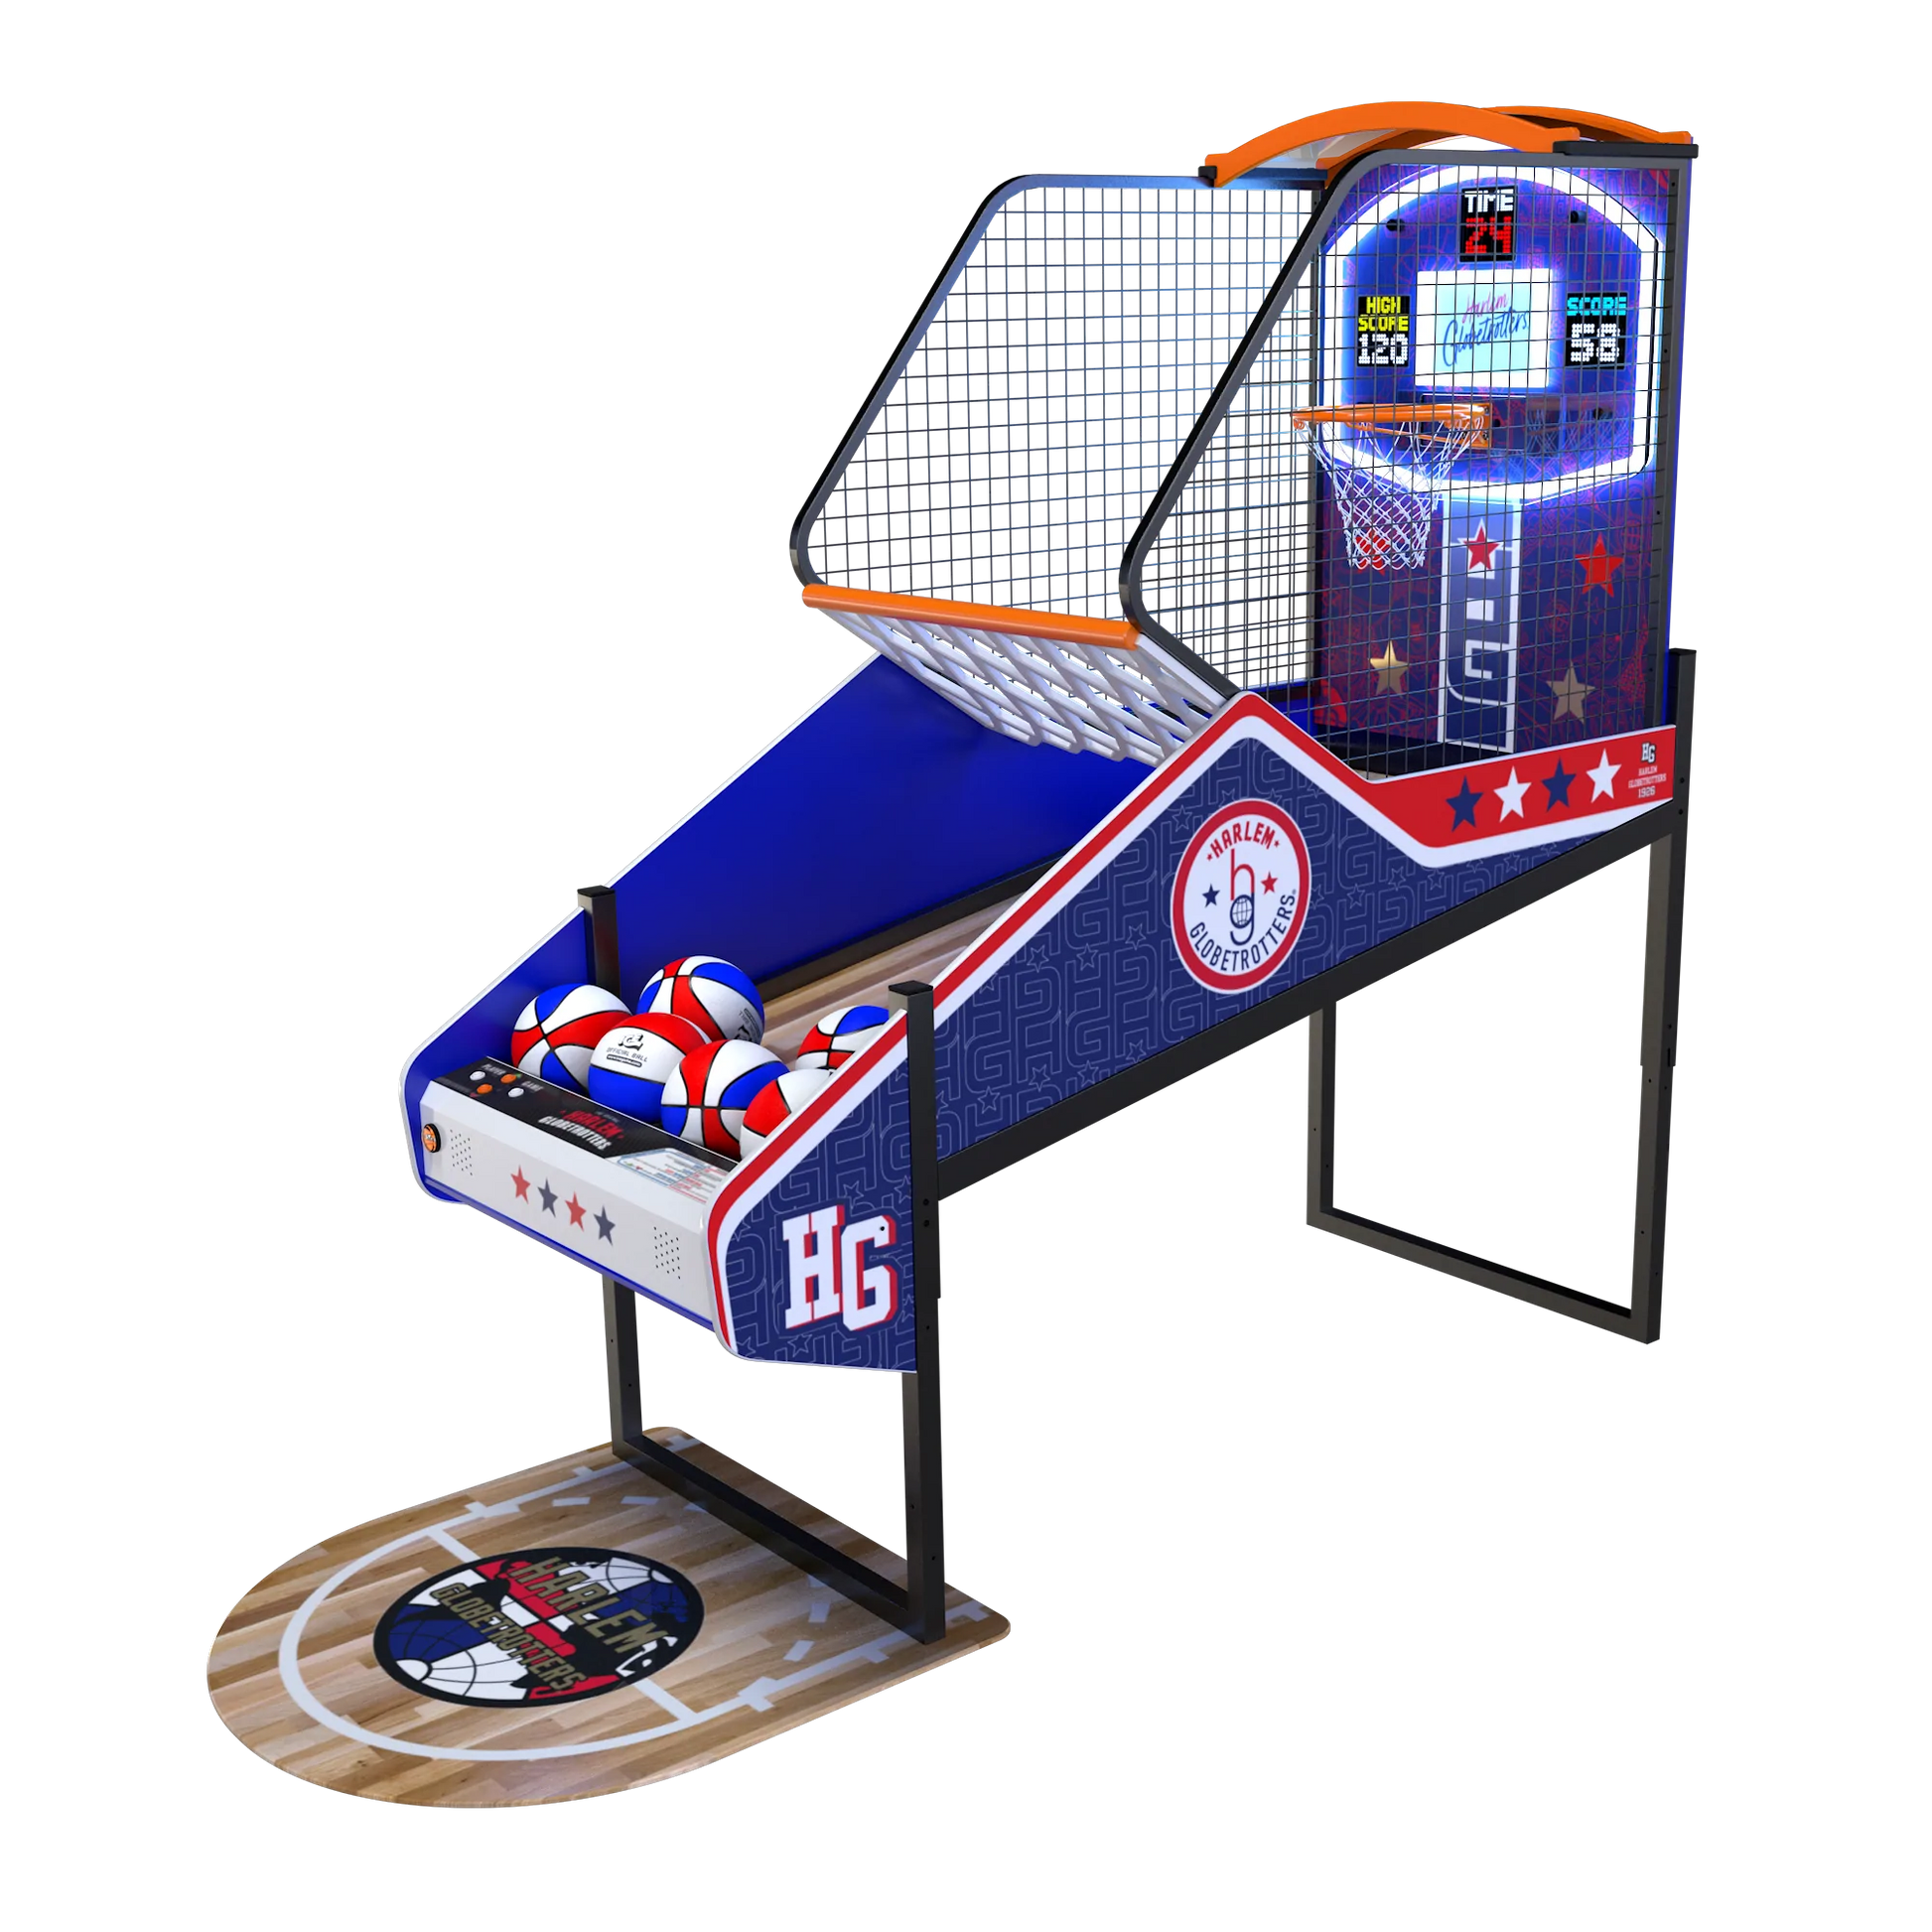 Harlem Globetrotters "CLASSIC" Scheme Basketball Arcade with Floor Mat - Prime Arcades Inc